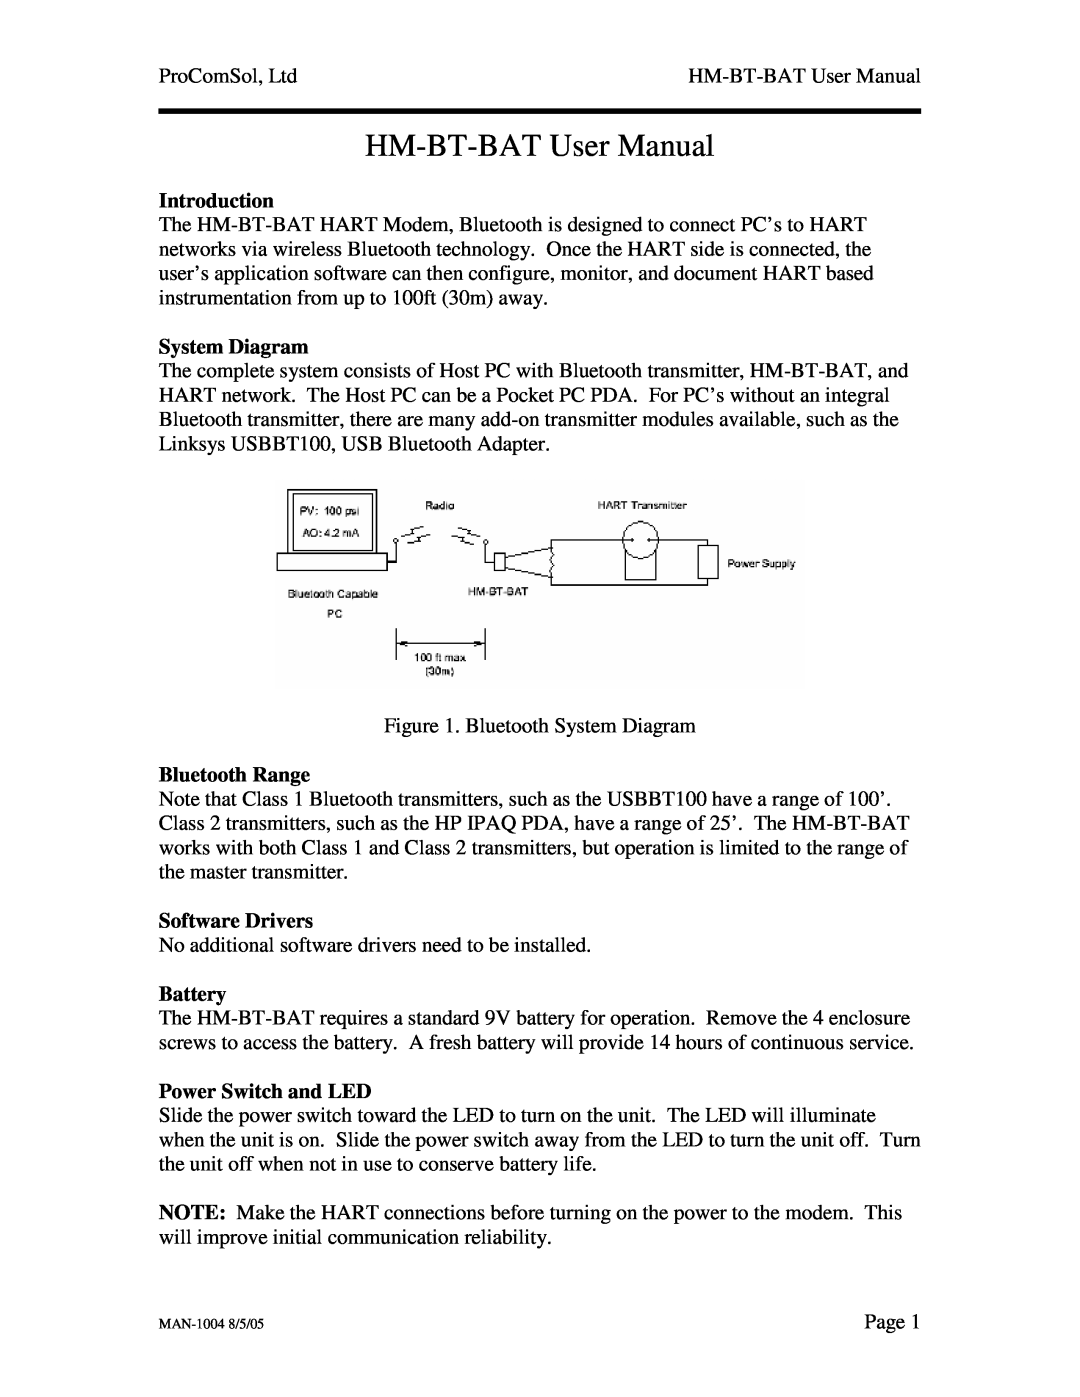 Procom HM-BT-BAT user manual Introduction, System Diagram, Bluetooth Range, Software Drivers, Battery 